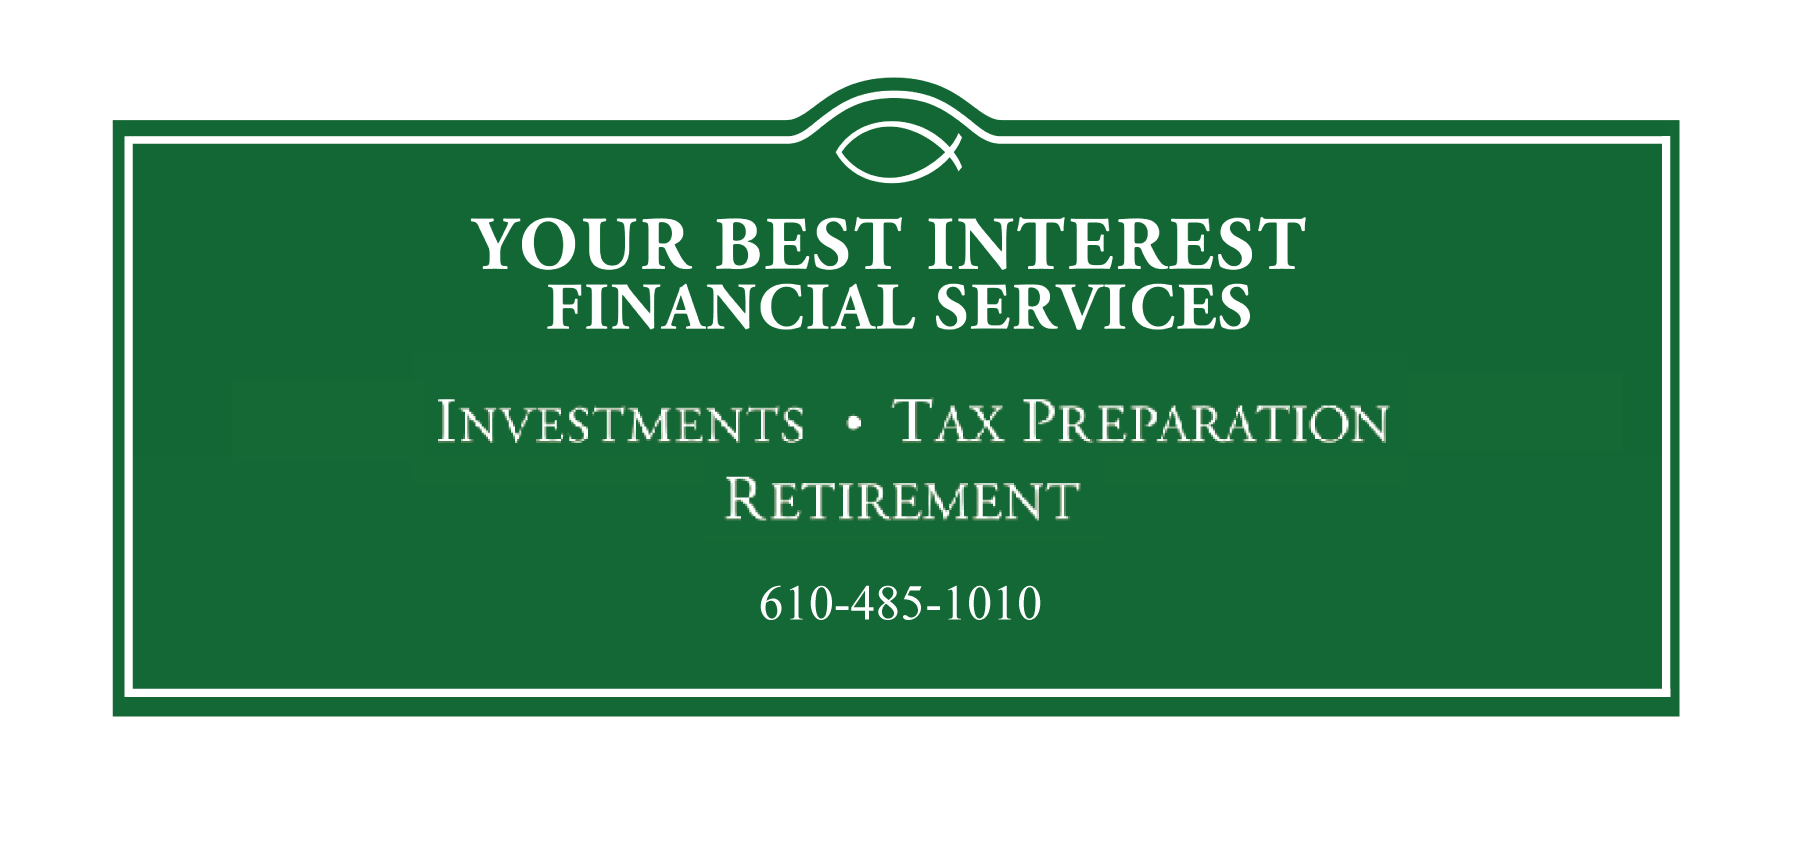 Your Best Interest Financial